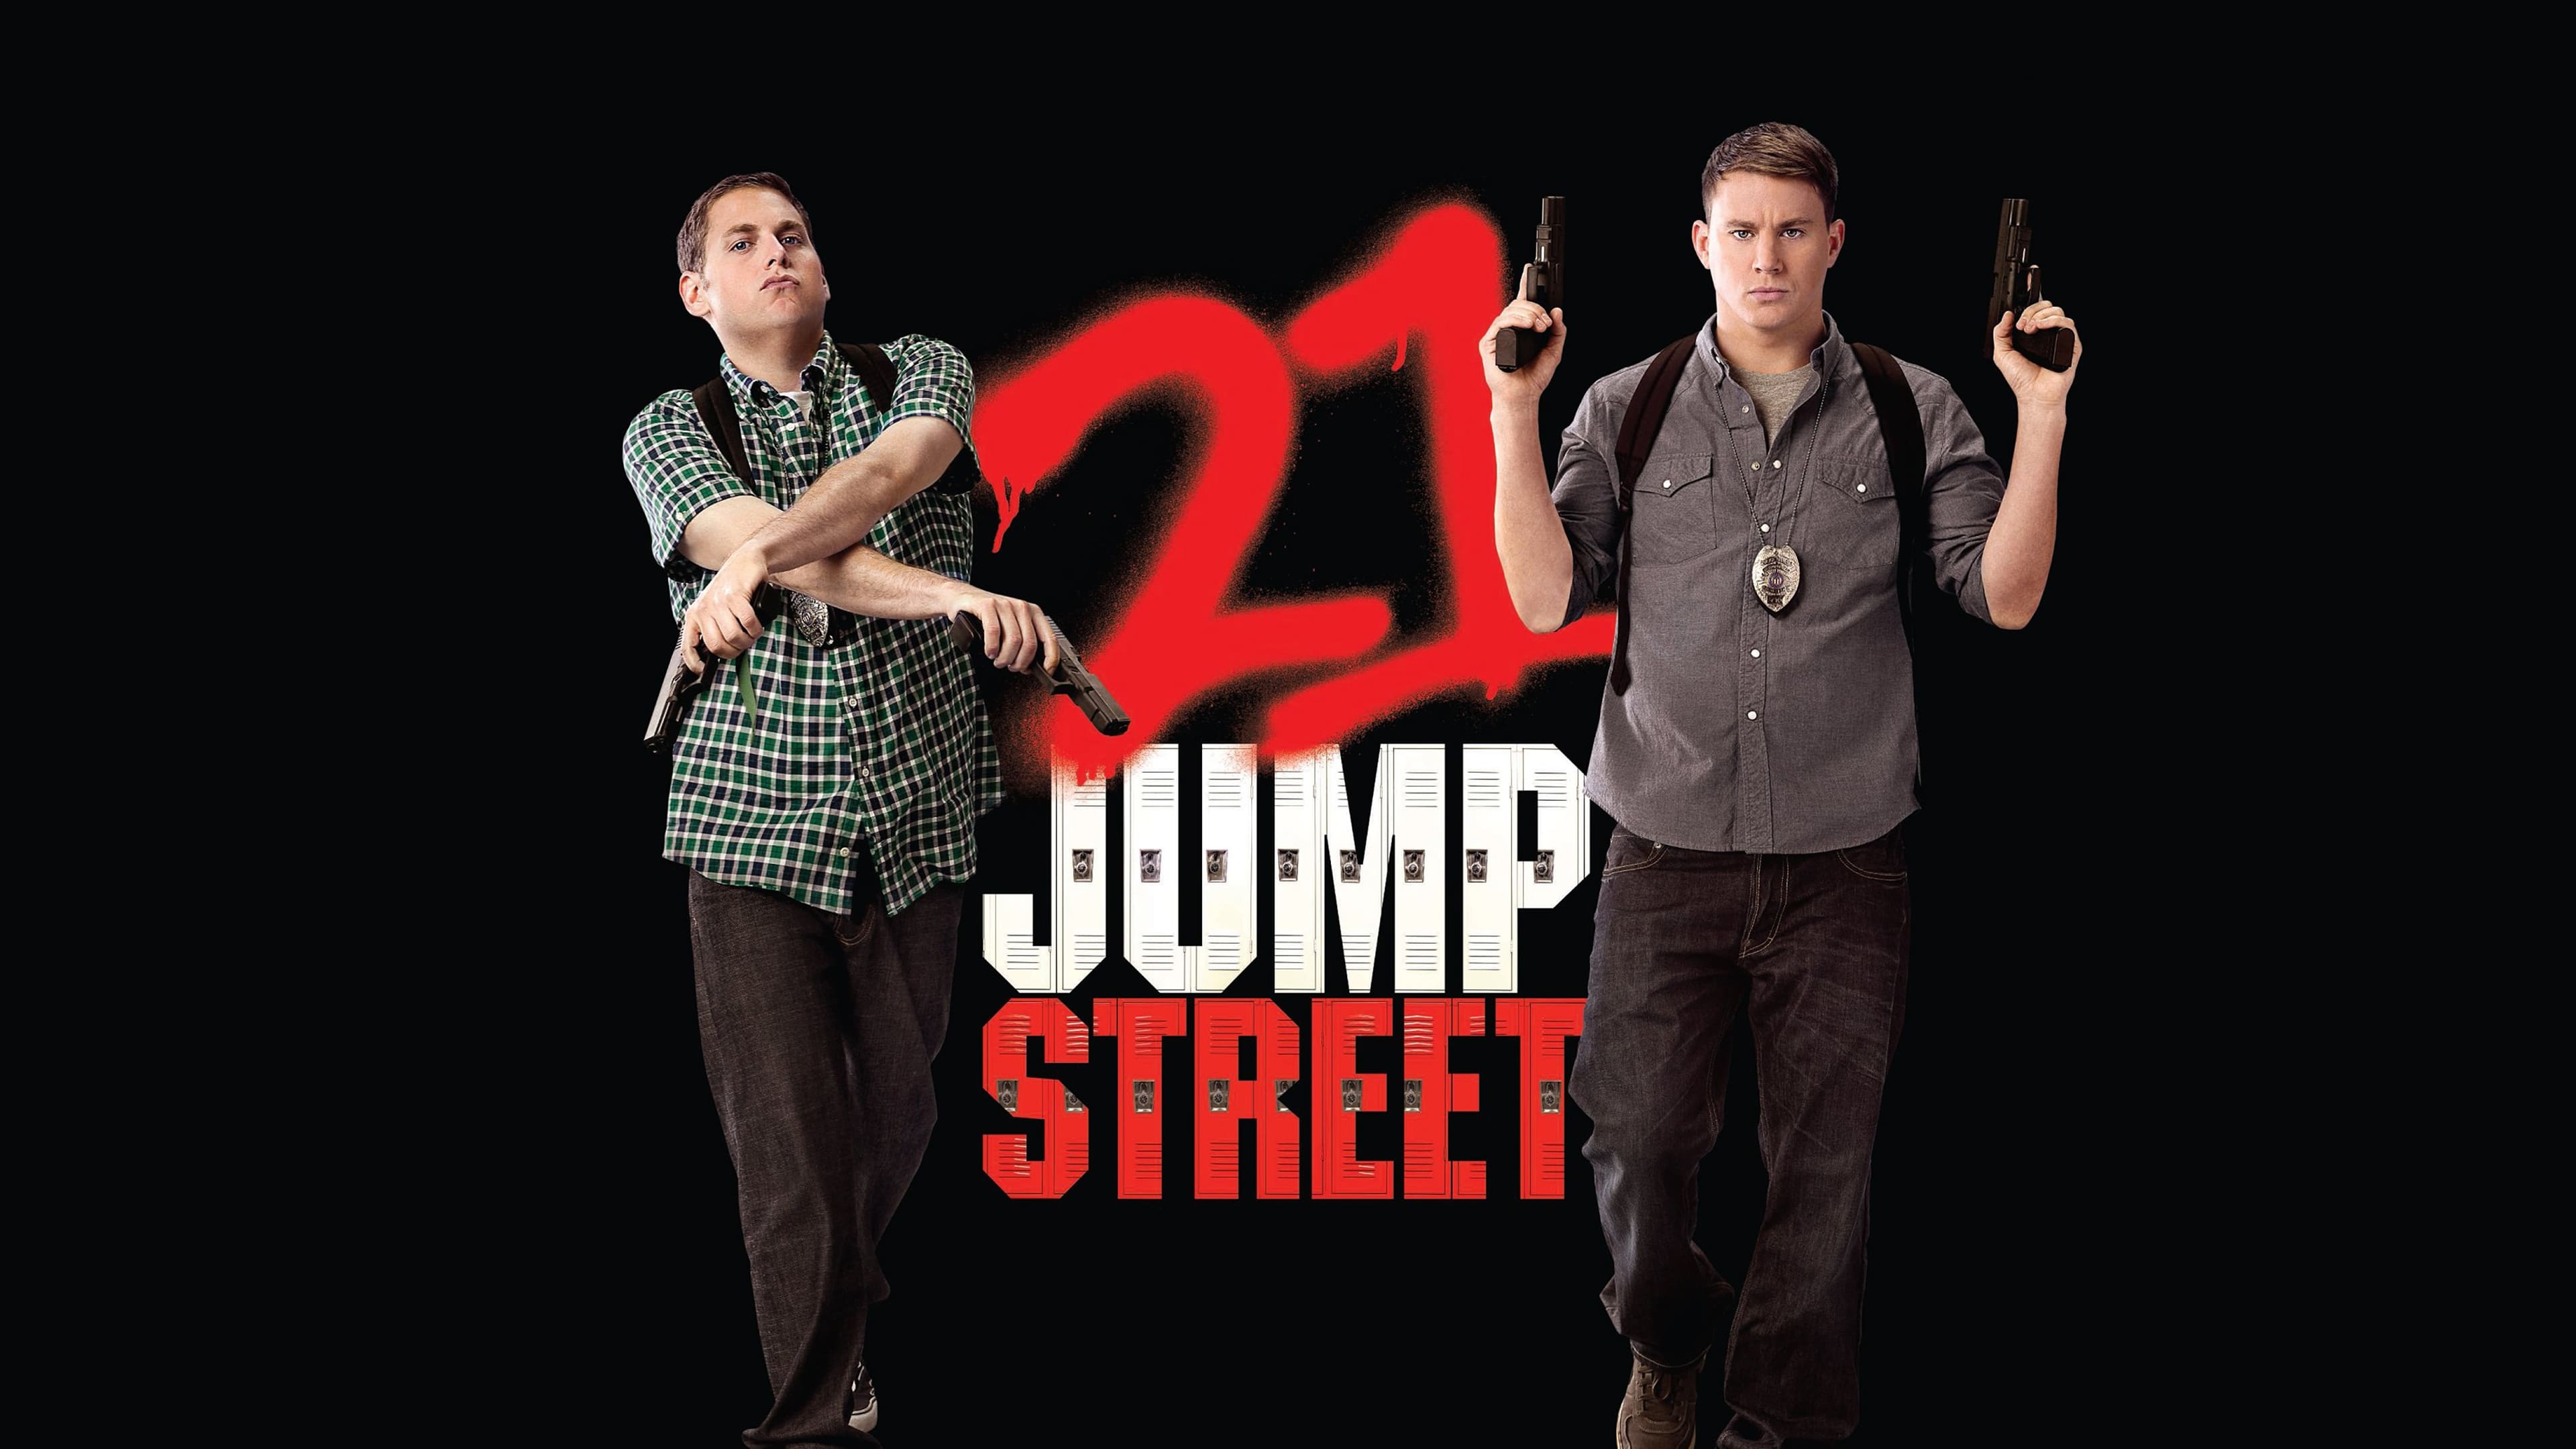 21 jump street cztorrent